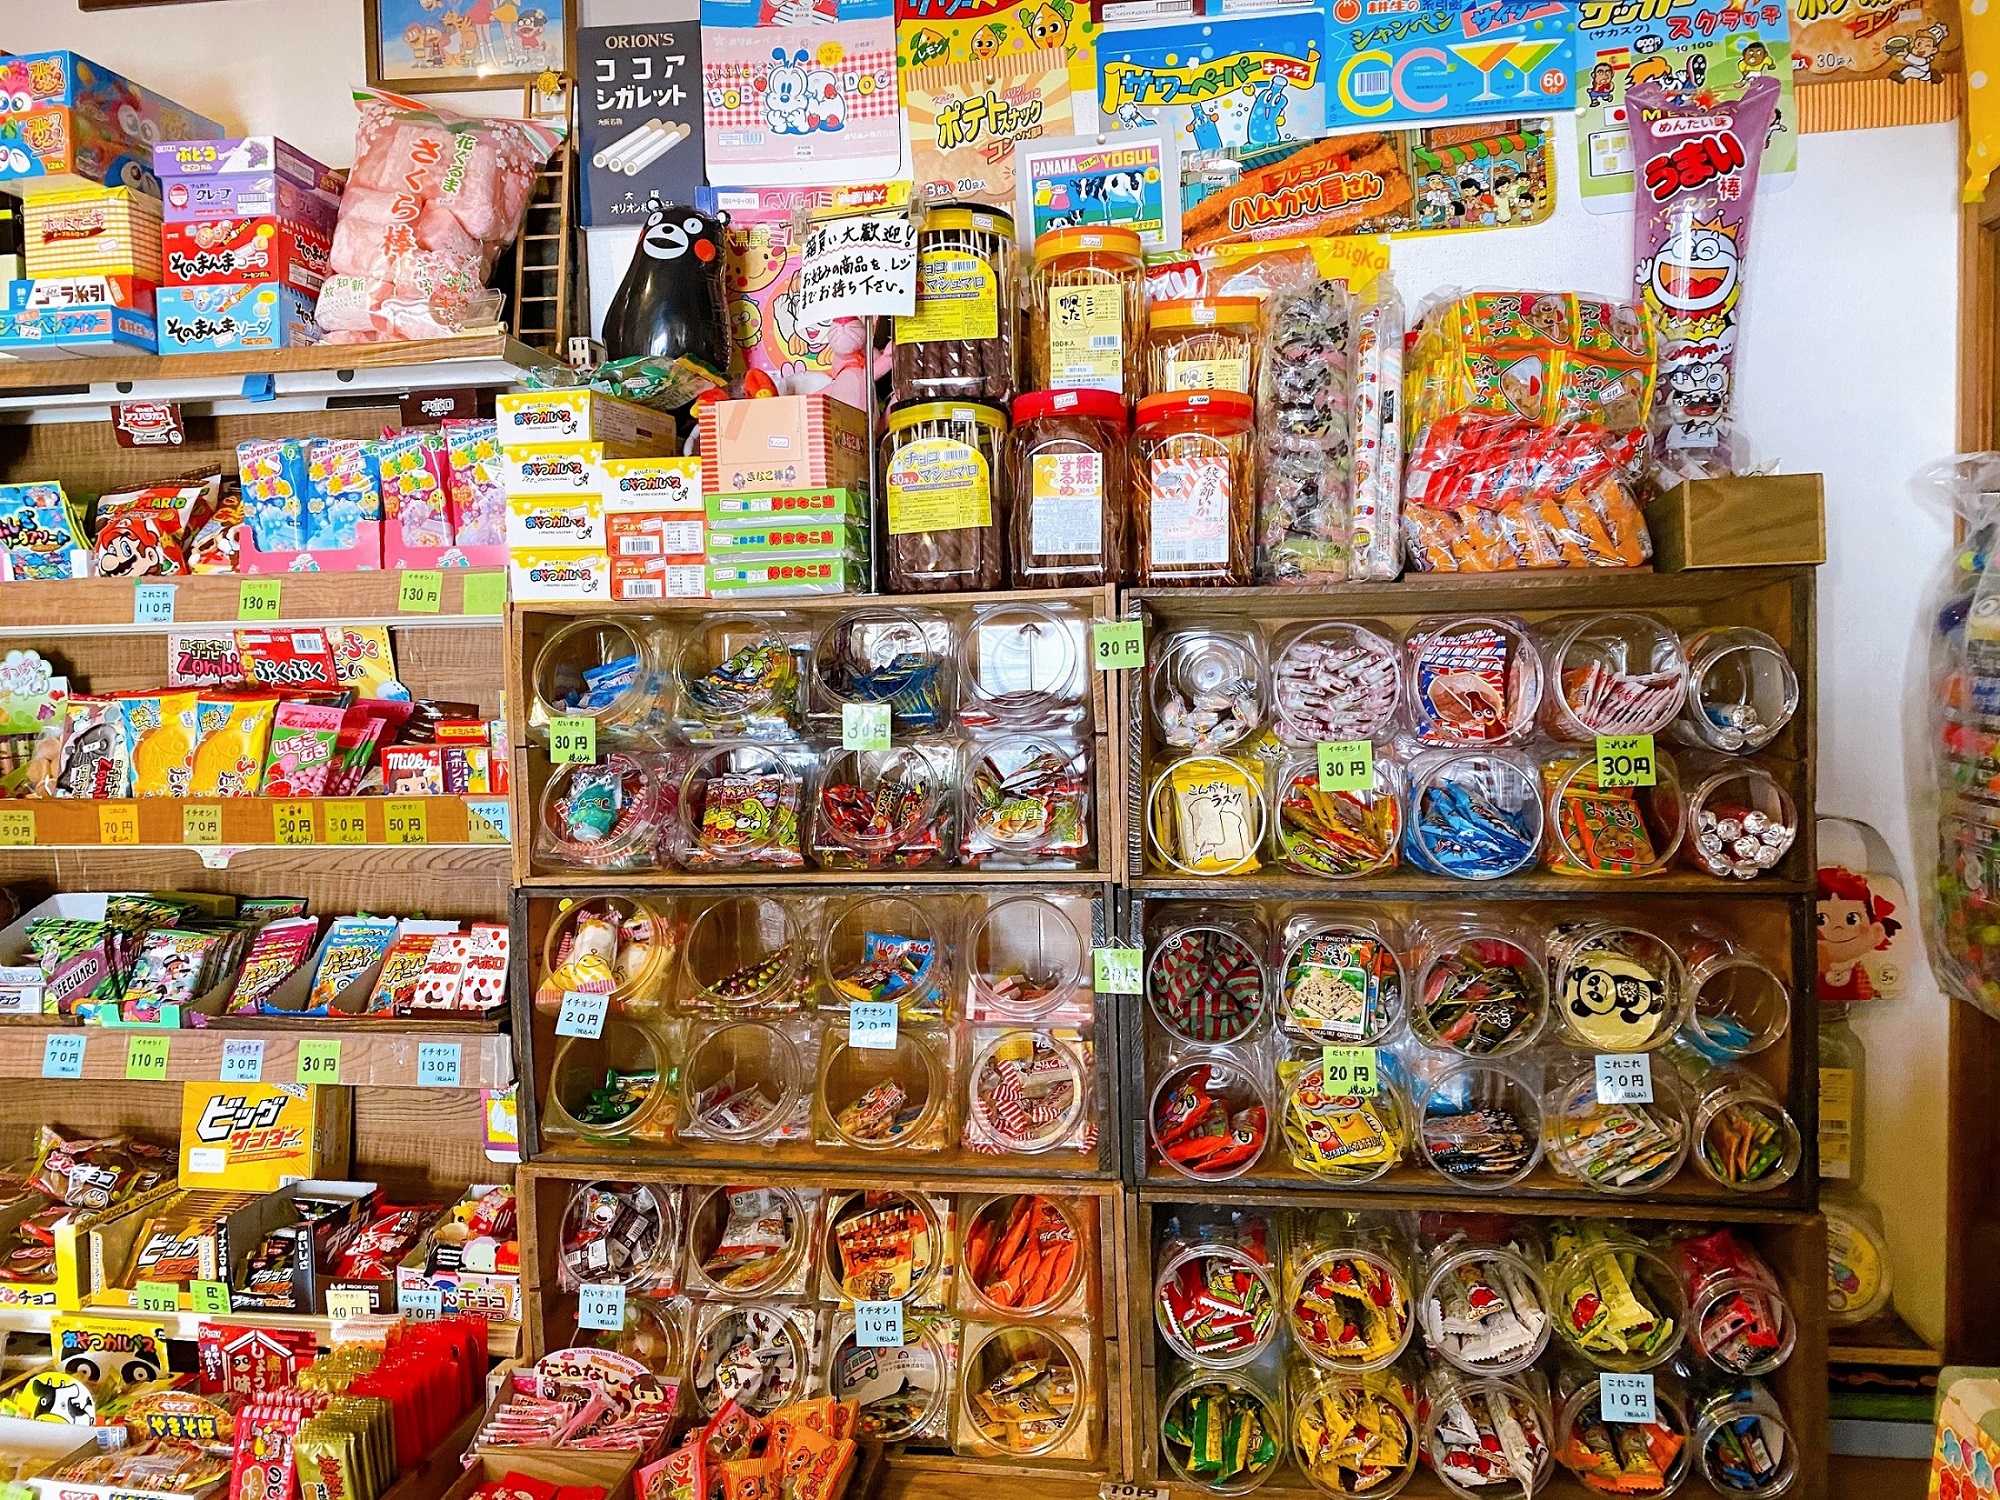 SKIP Shop !				静岡県内のママ・パパがオススメする静岡の親子にとって嬉しいSHOPをご紹介